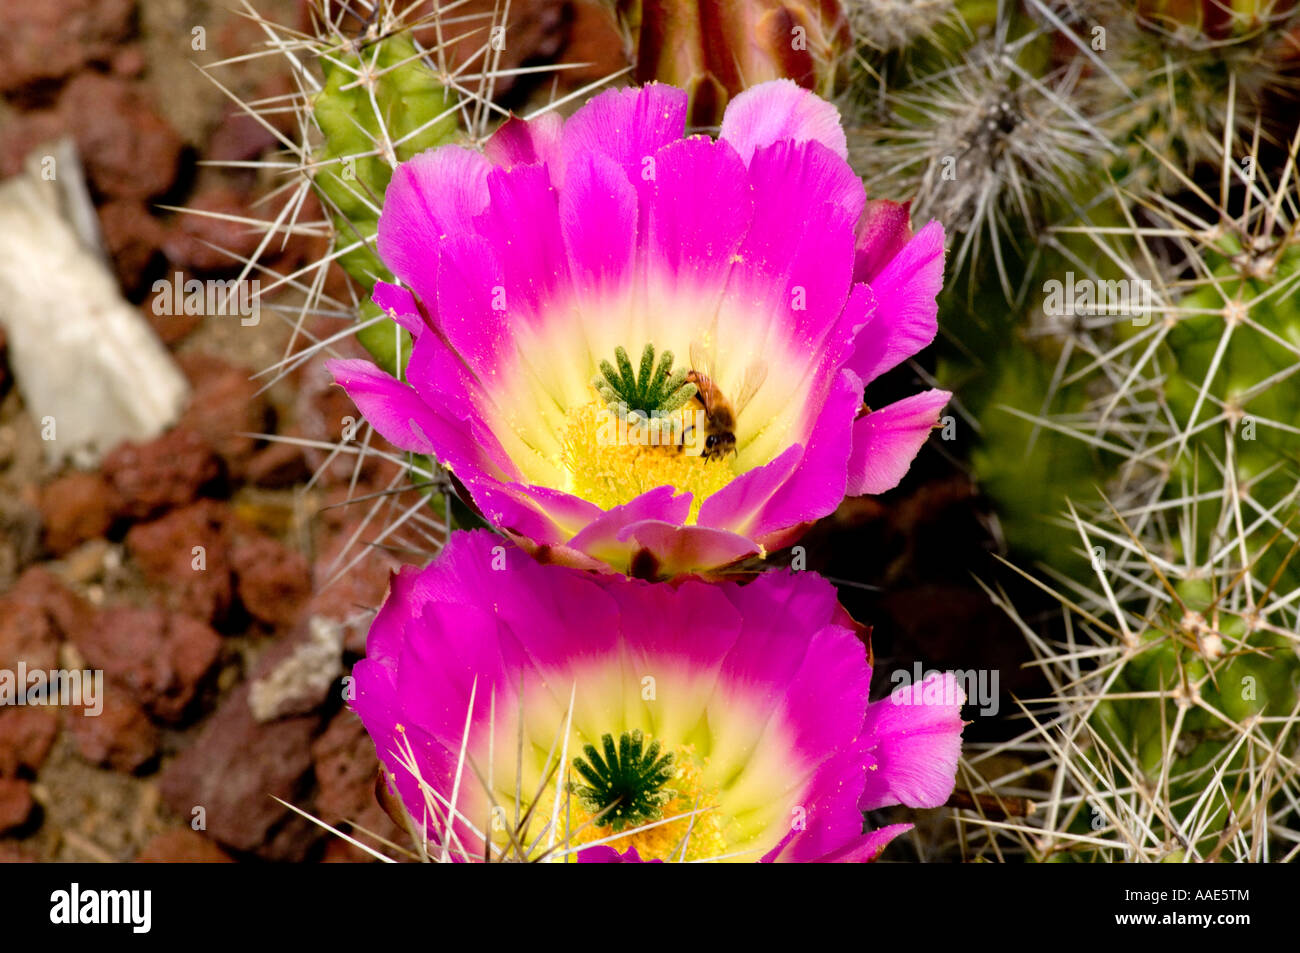 Bee pollinating cactus flower Stock Photo